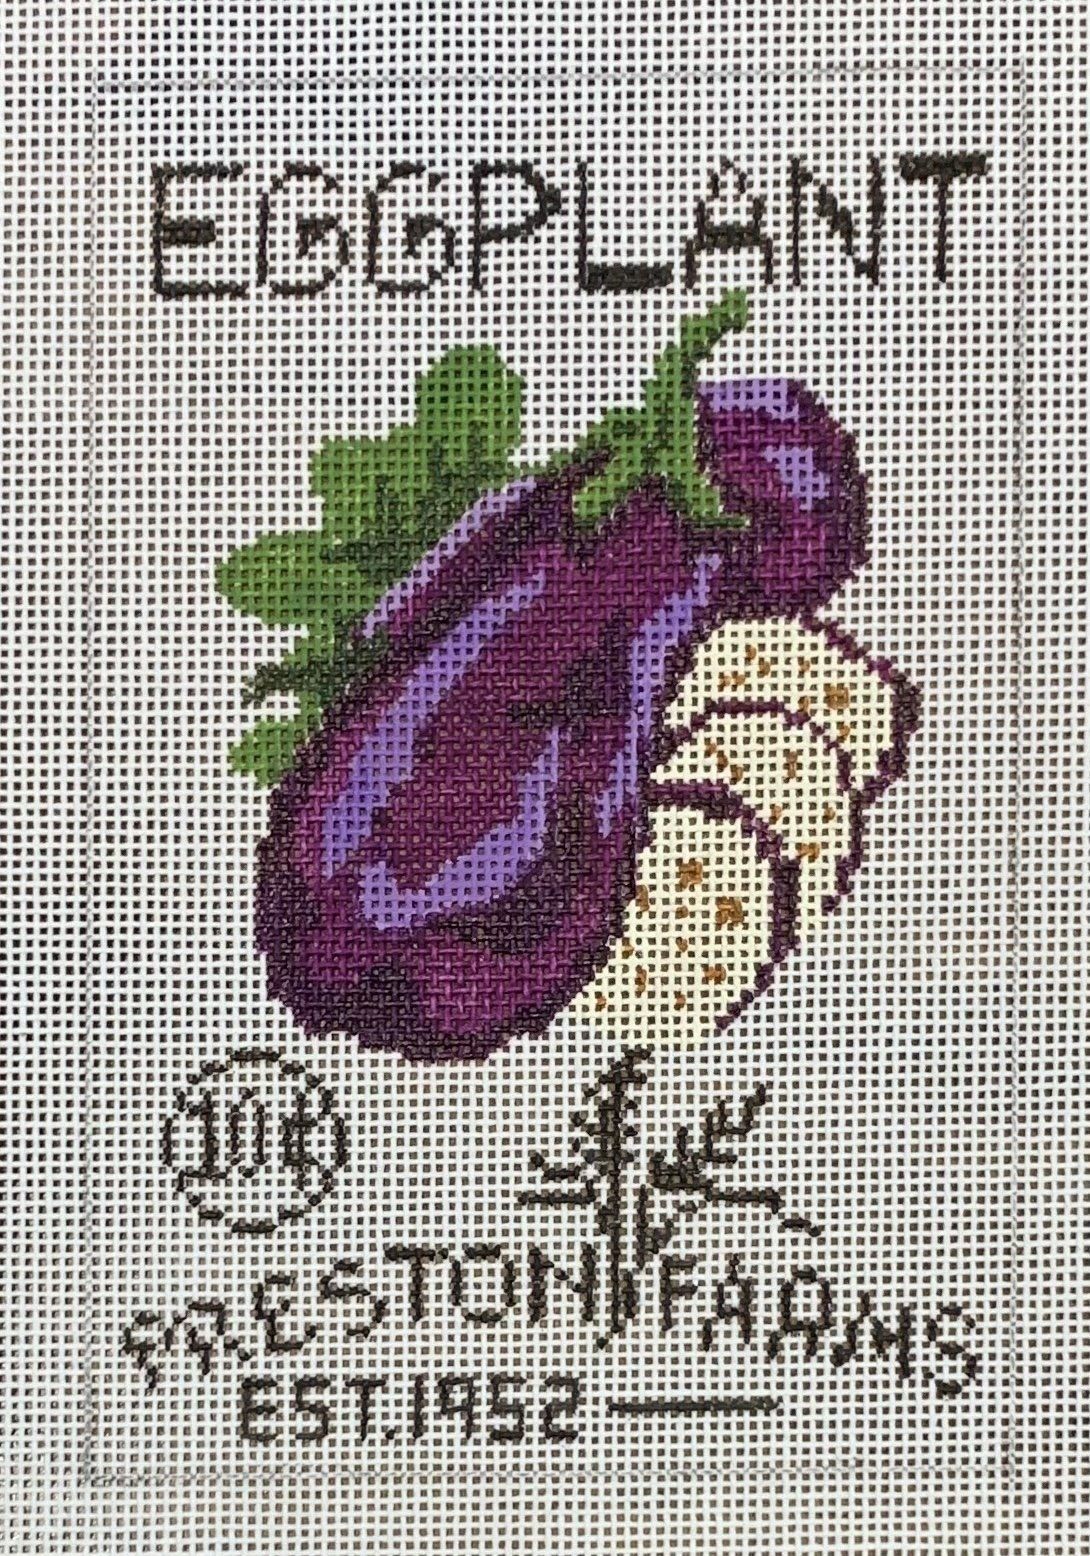 Seed Packet: Eggplant